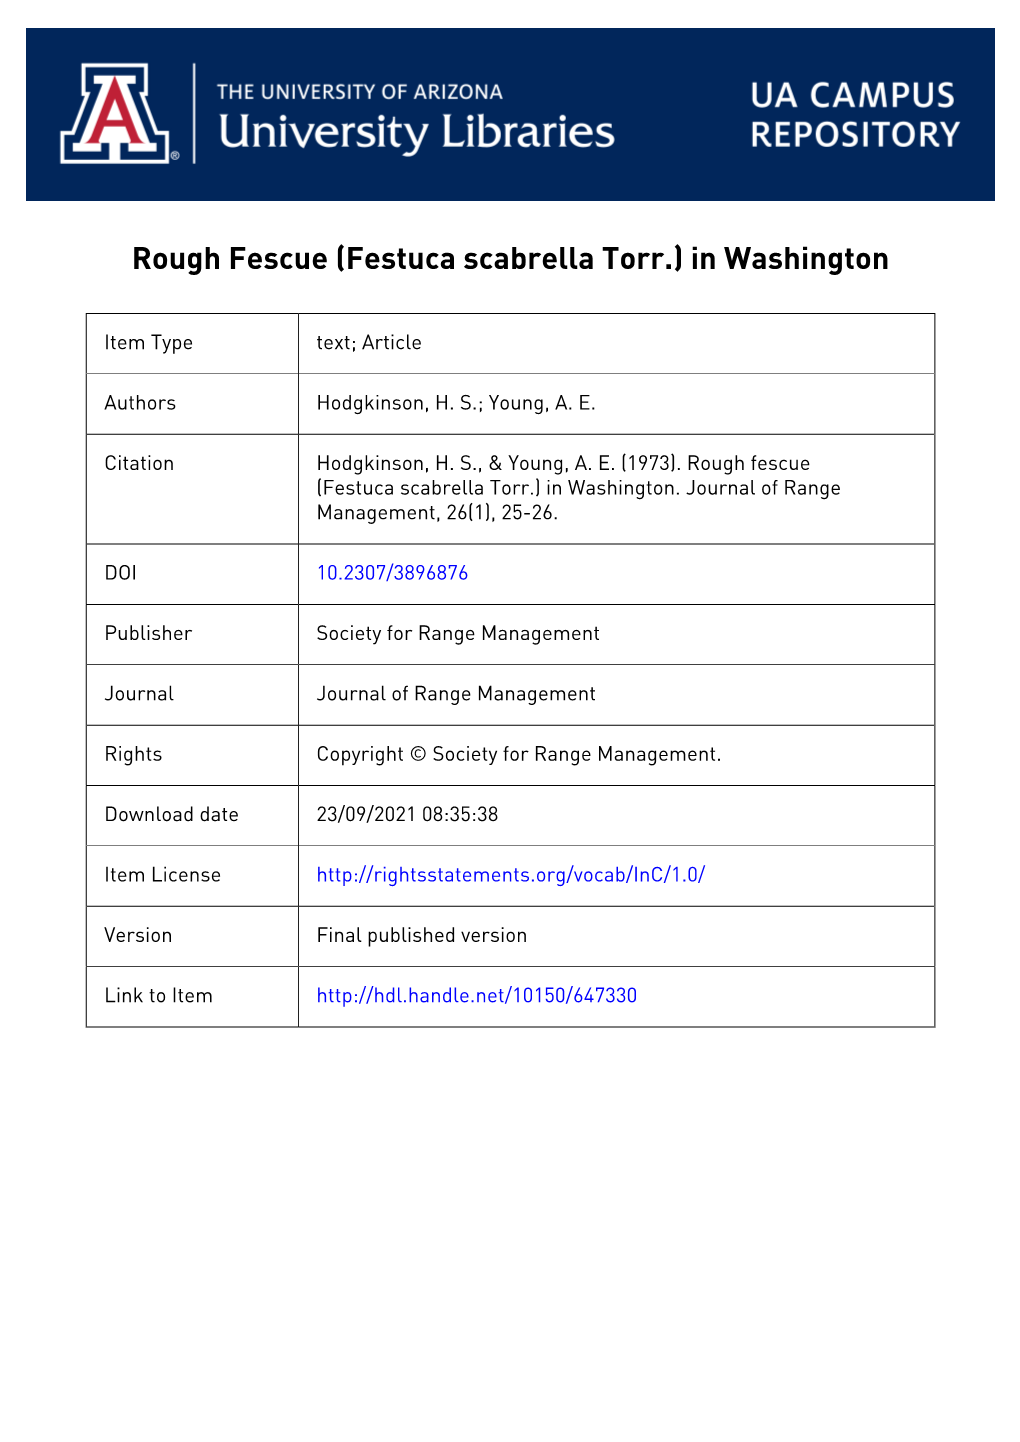 Rough Fescue (Festuca Scabreua Tom.) in Washington